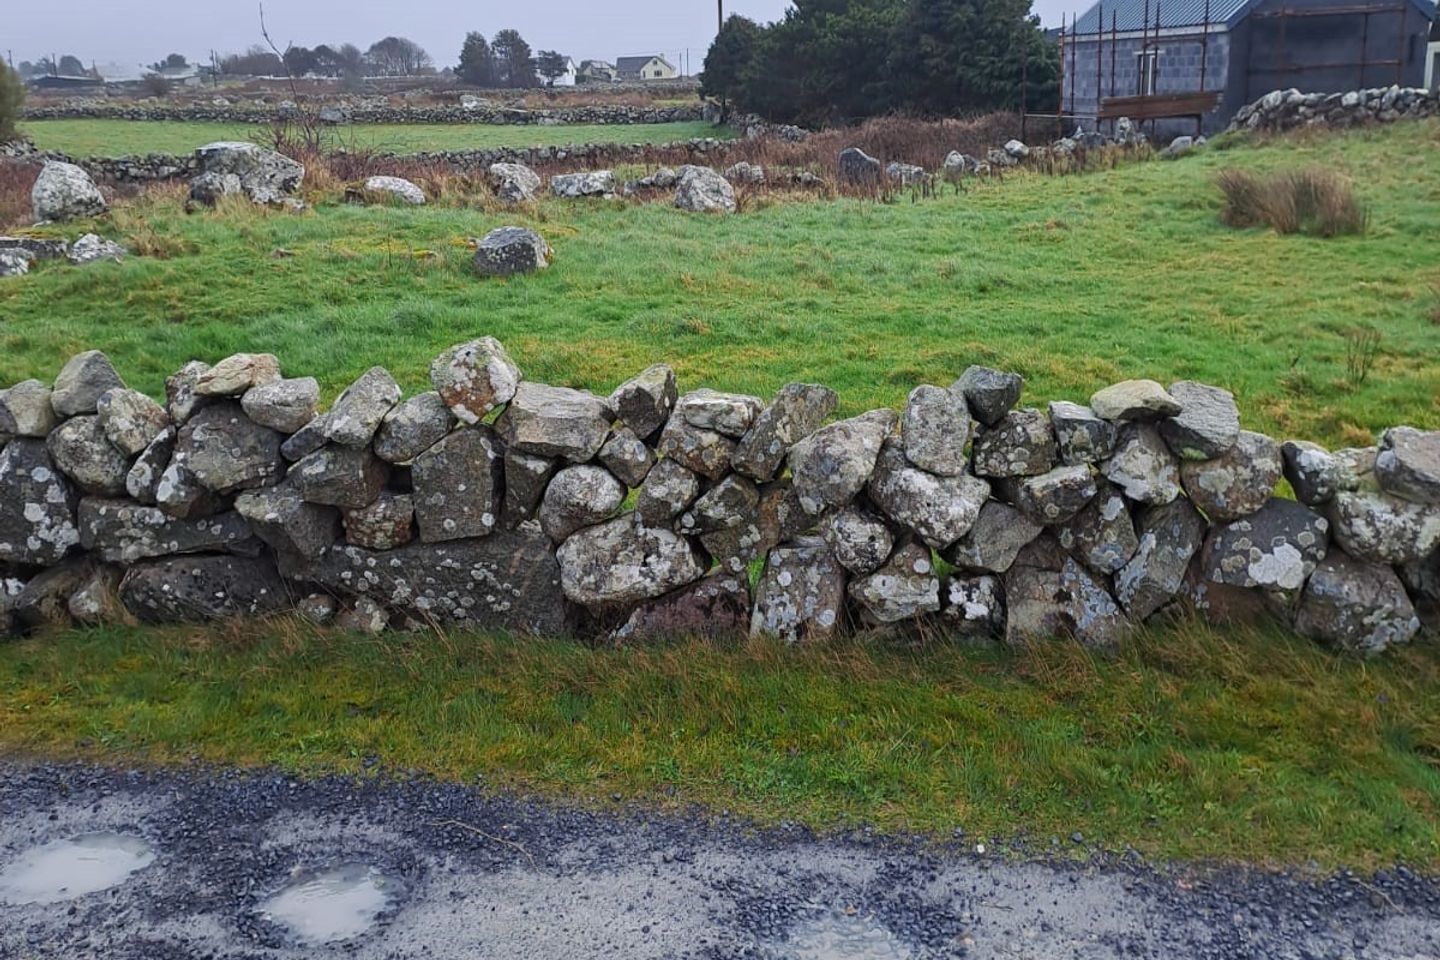 Loughaunbeg West, Inverin, Co. Galway